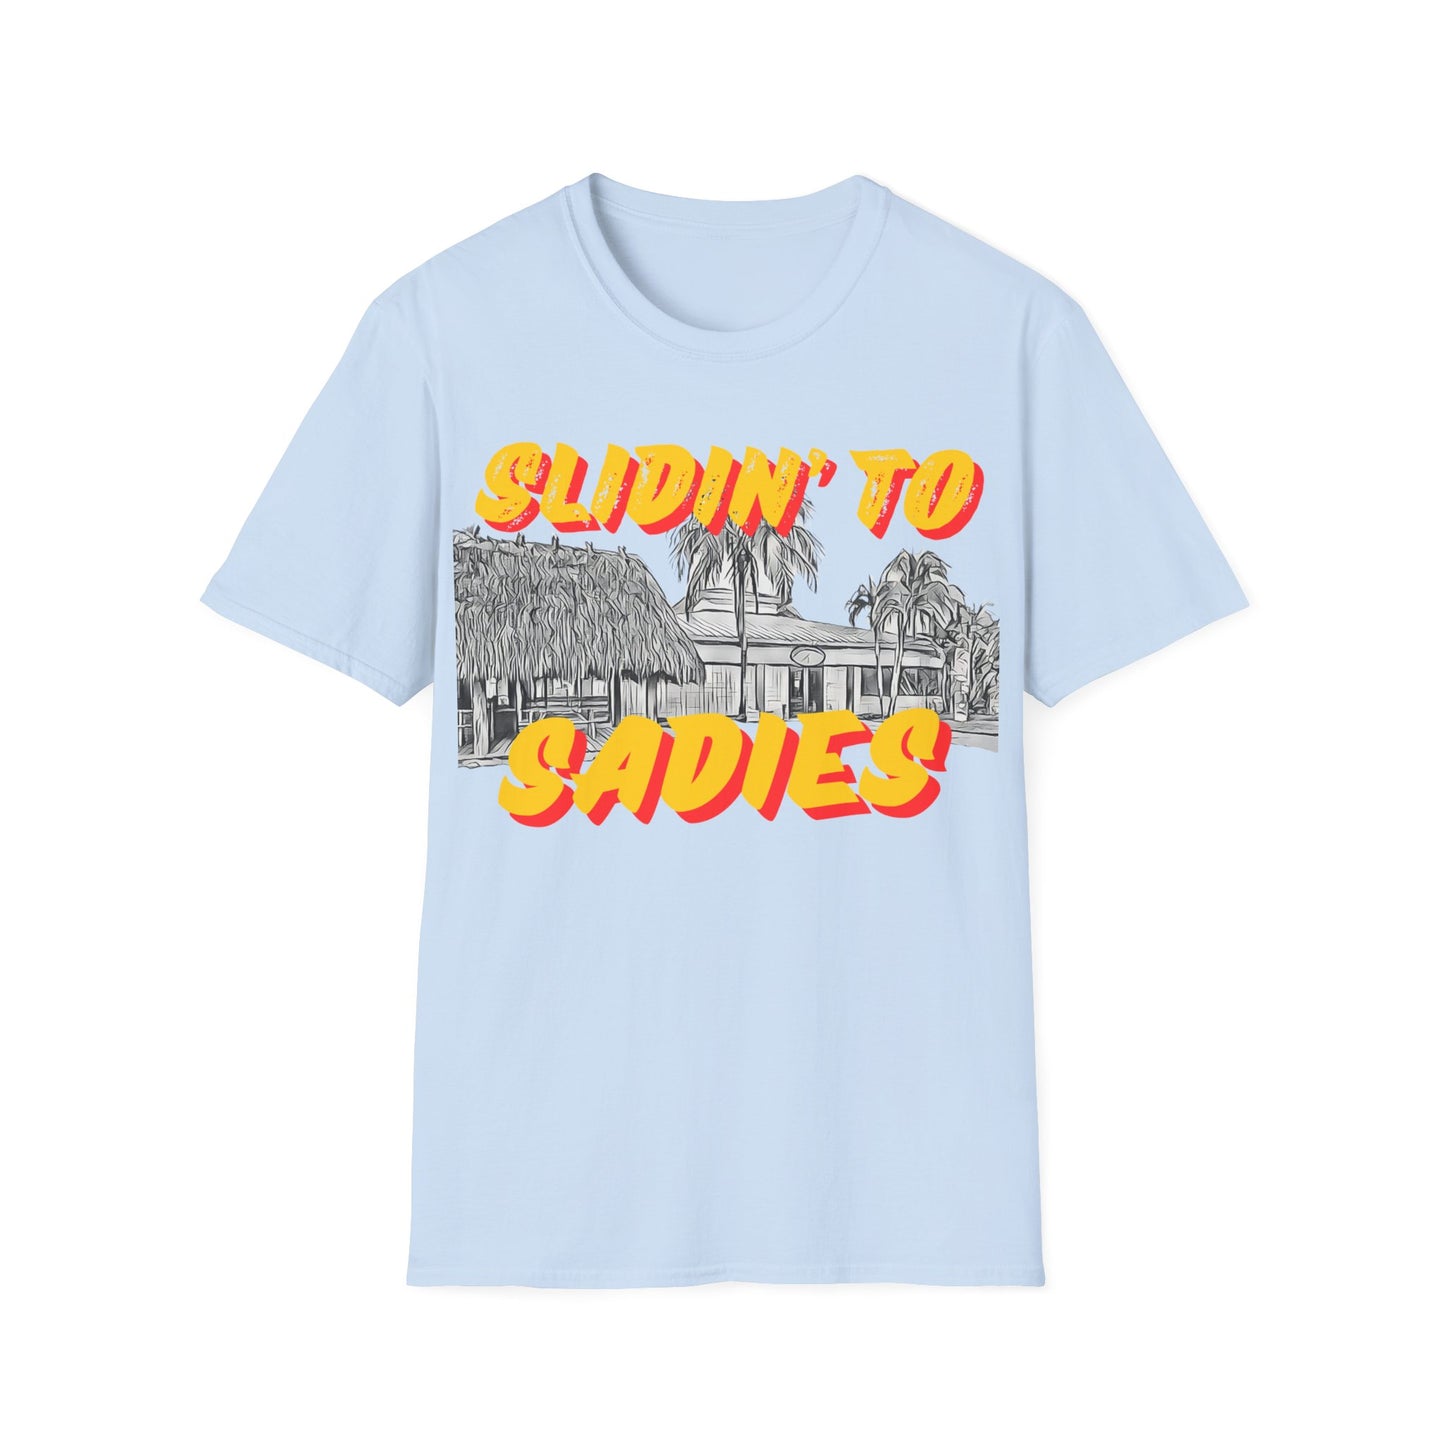 Slidin’ to Sadies T-Shirt